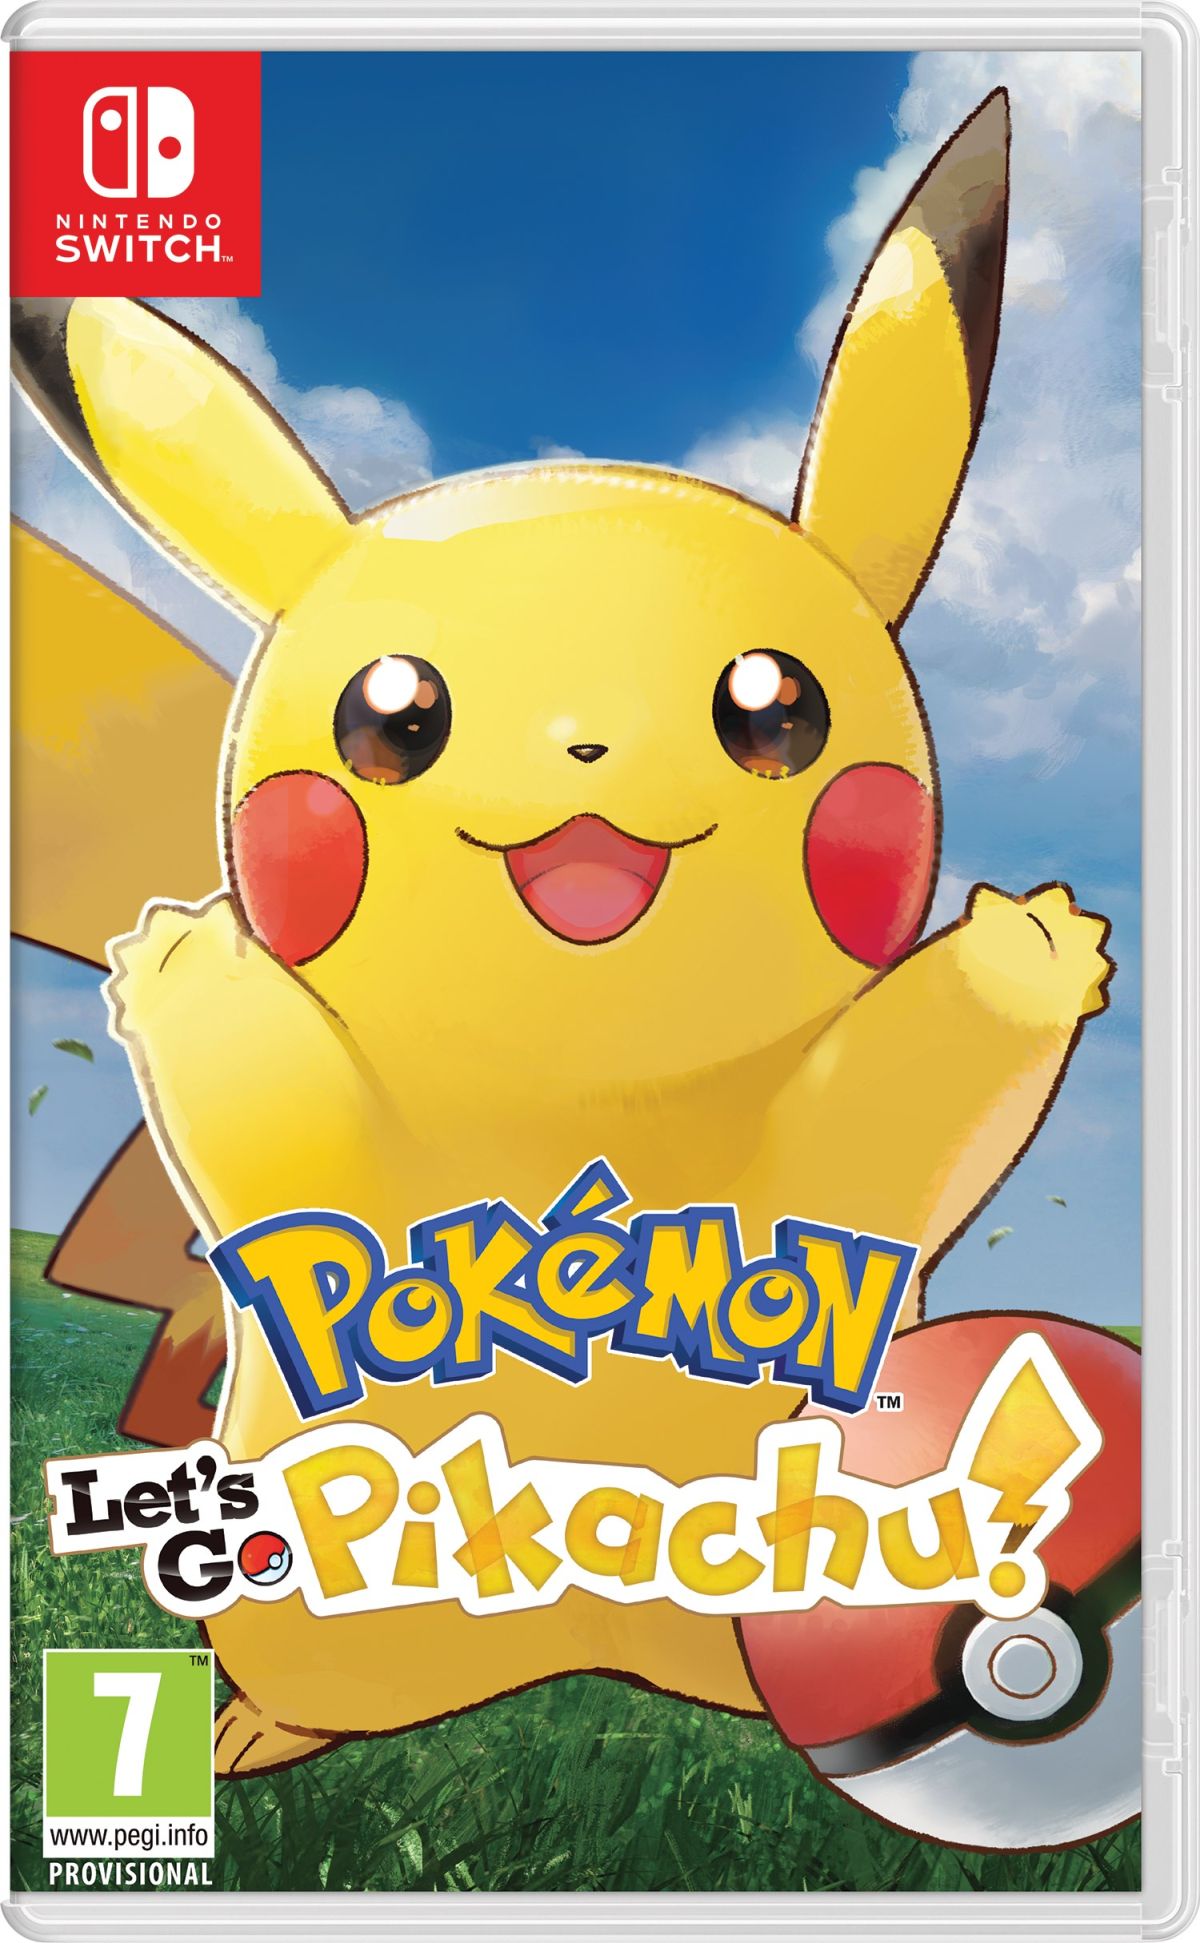 Pokemon Let's Go, Pikachu/Eevee!